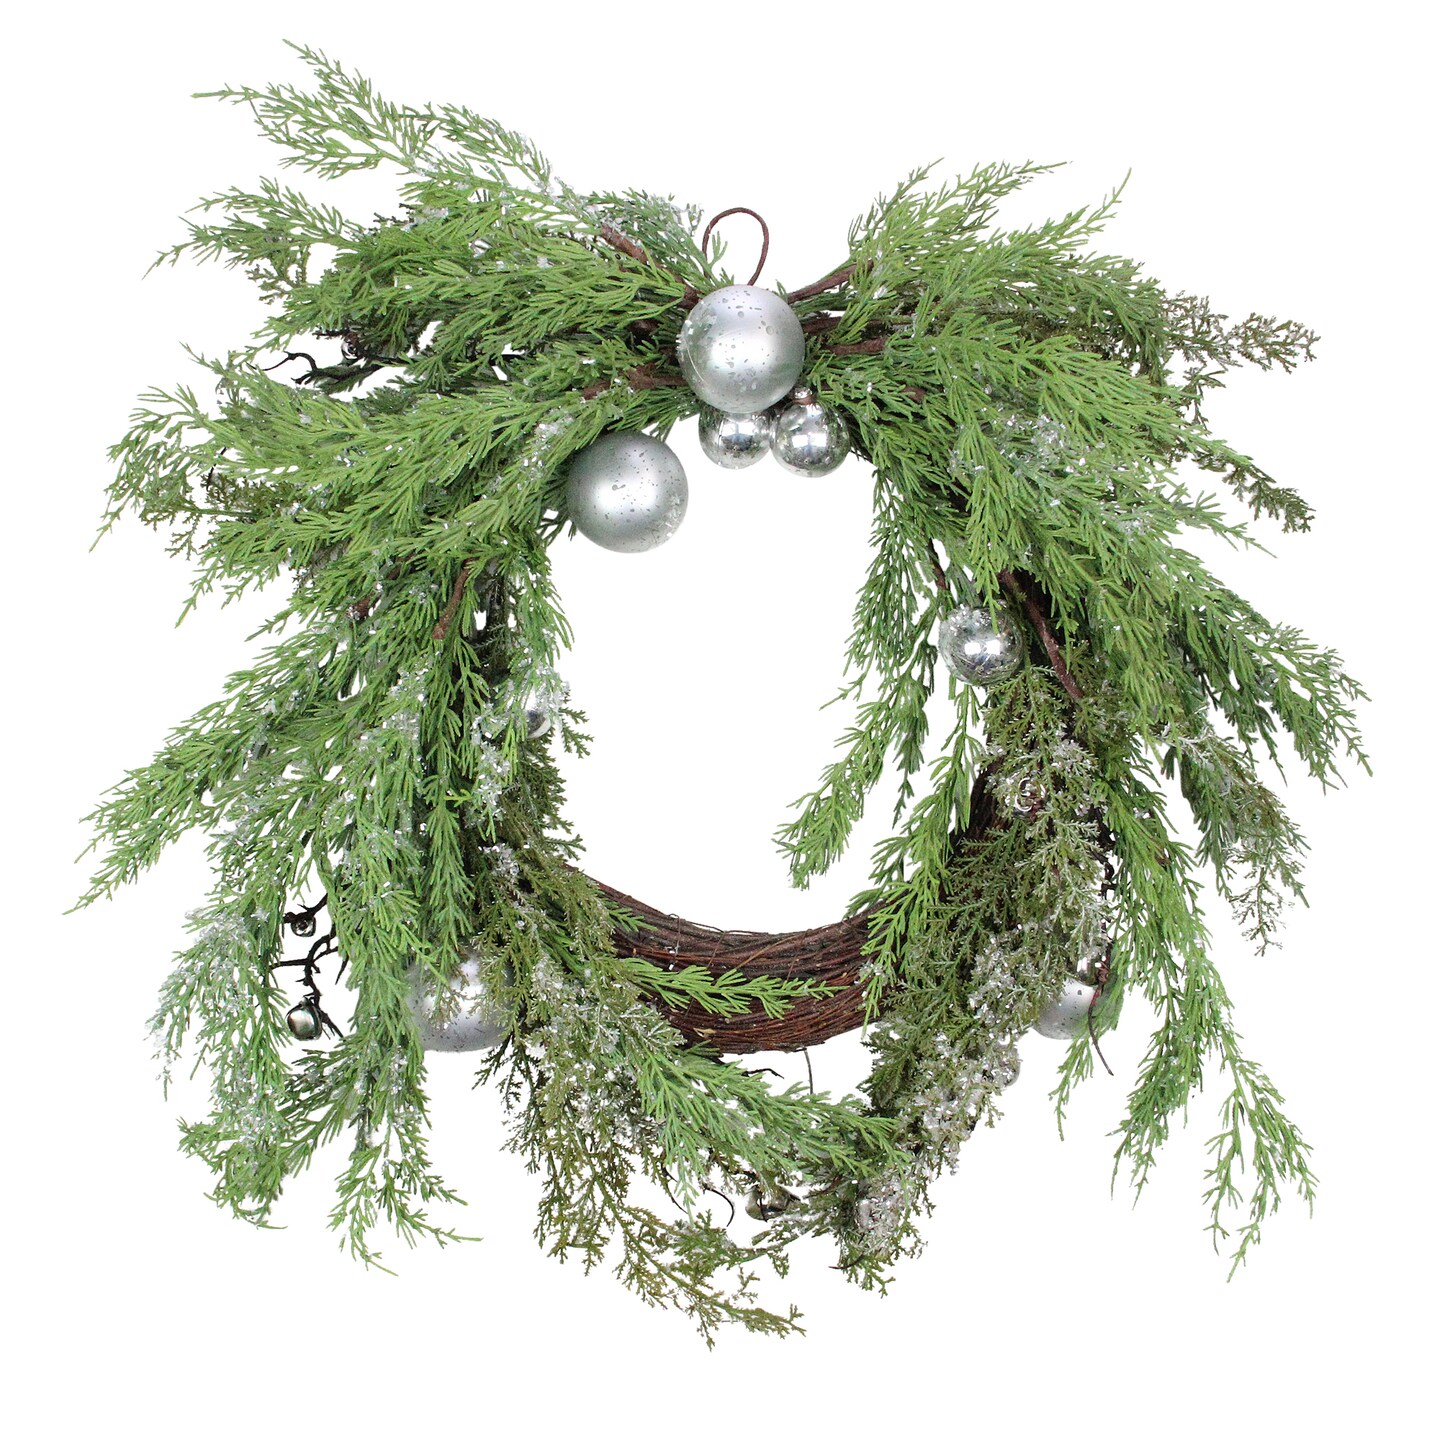 Select Artificials Iced Cedar Ornaments and Bells Artificial Christmas Wreath - 24-Inch, Unlit